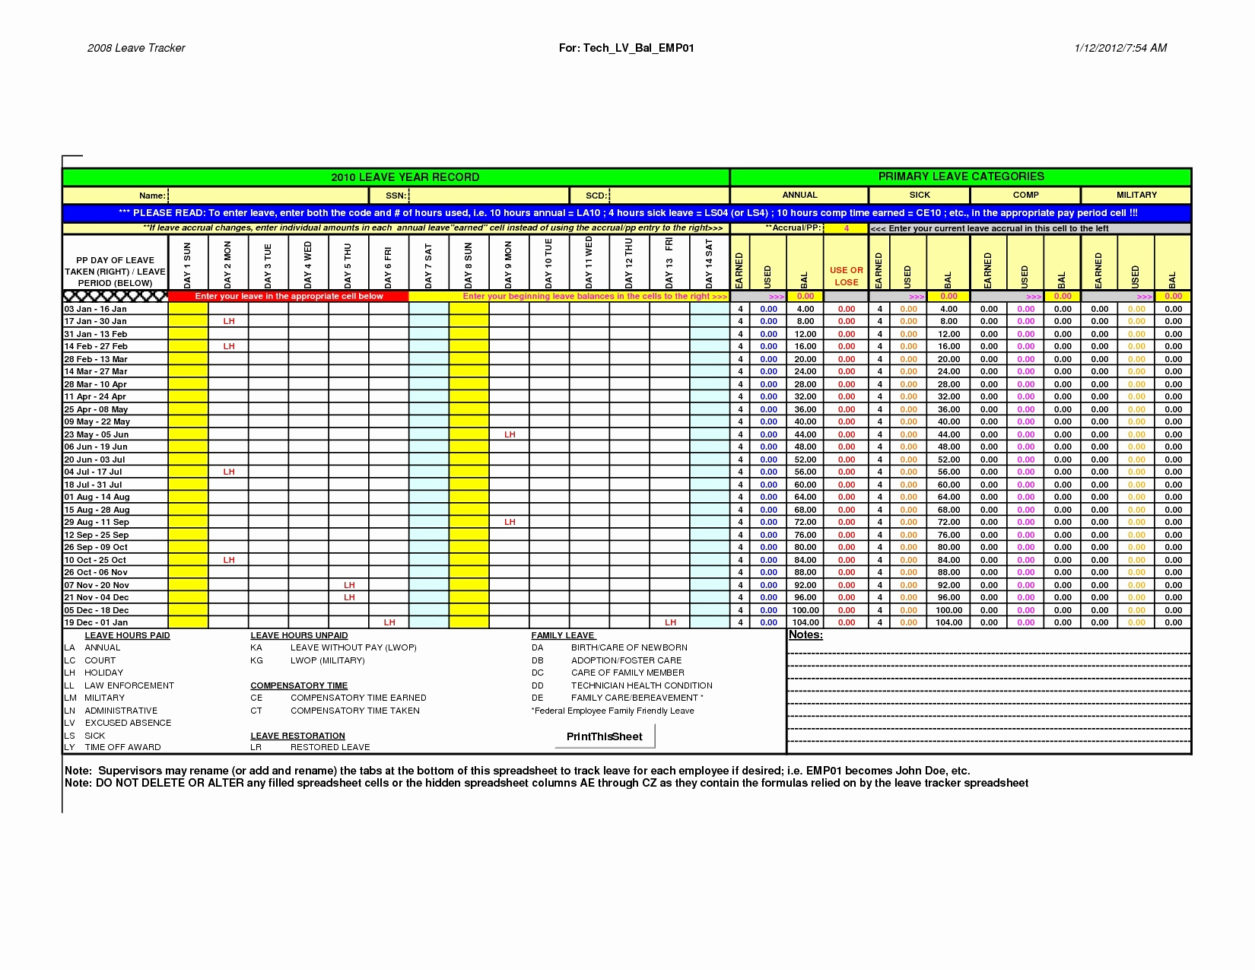 fmla-tracking-spreadsheet-db-excel